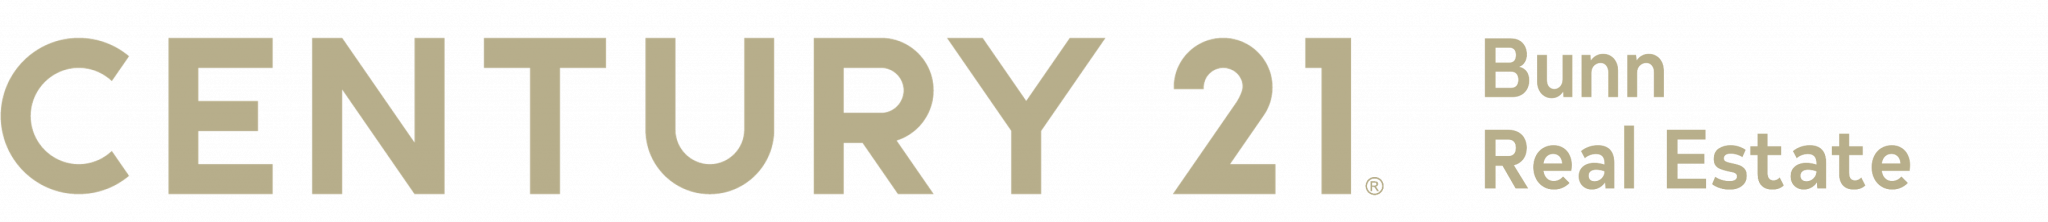 image of CENTURY 21 Bunn Real Estate Gold Logo